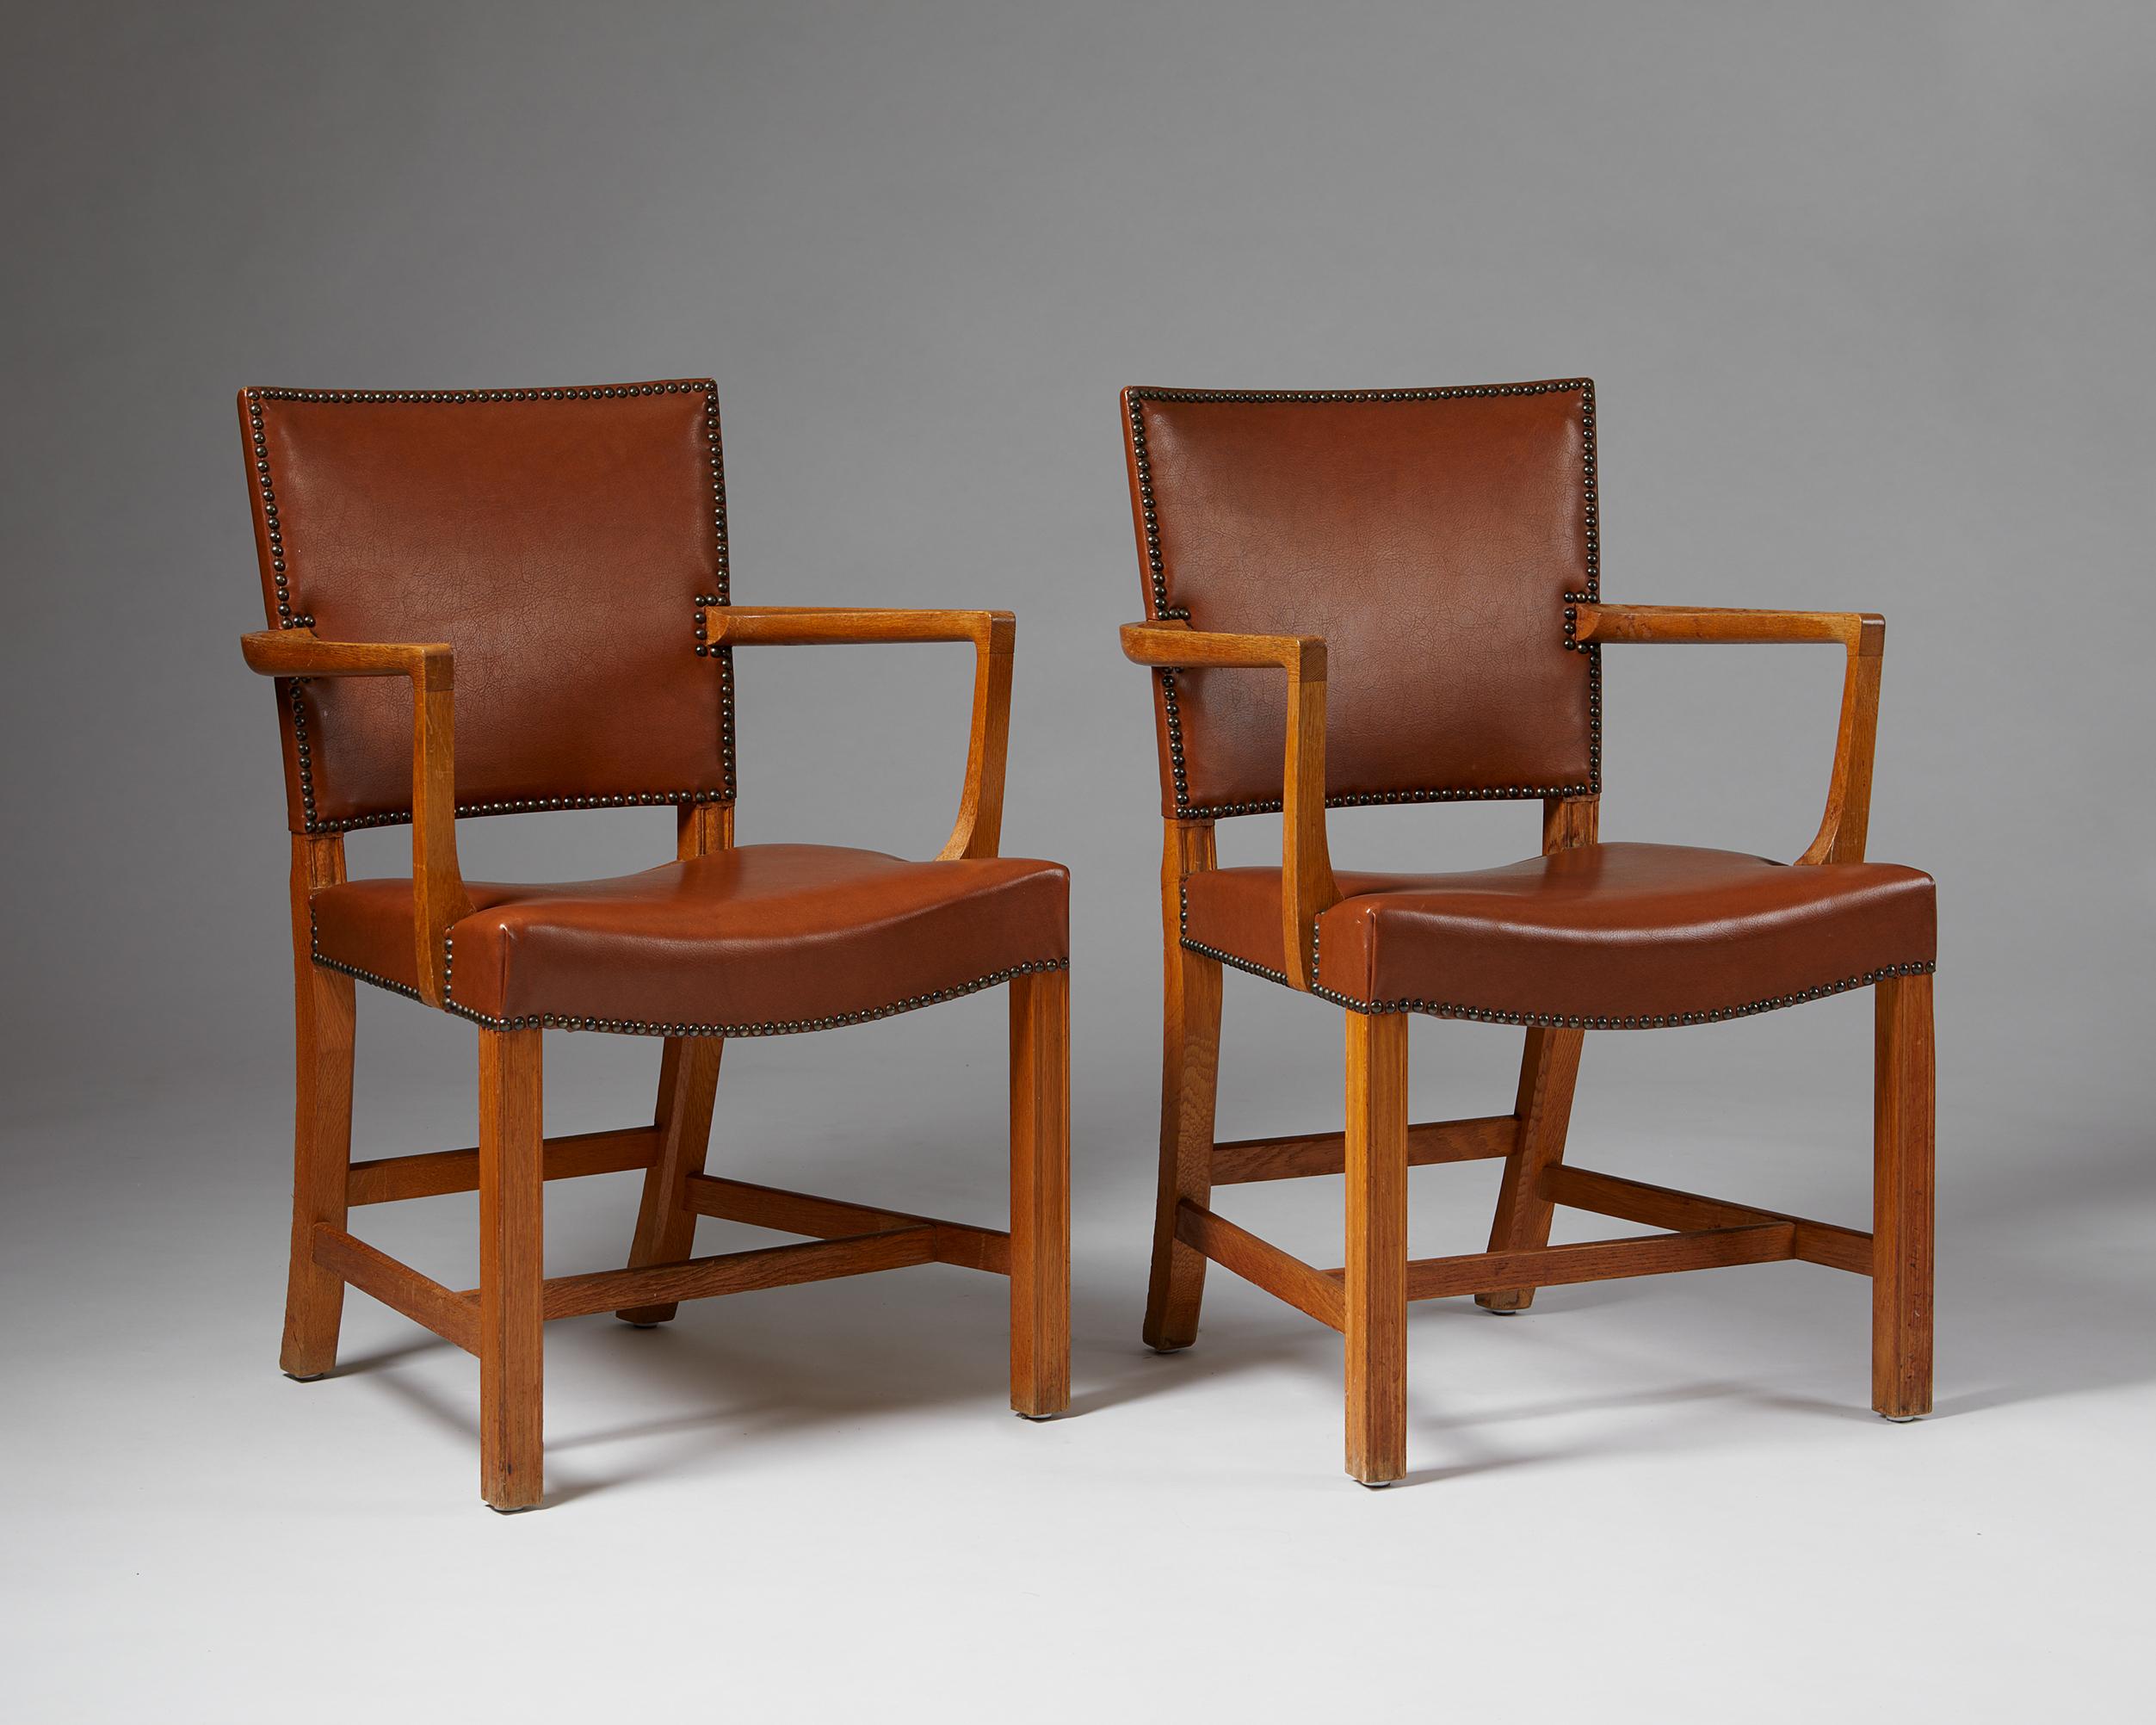 Pair of armchairs “The Red Chair” designed by Kaare Klint for Rud. Rasmussen,

Denmark, 1930.

Oak, leather upholstery and brass.

Stamped ‘RUD. RASMUSSENS SNEDKERIER 45 NORREBROGADE KOBENHAVN’
Literature: Gorm Harkær, Klintiana: “Kaare Klint”, vol.